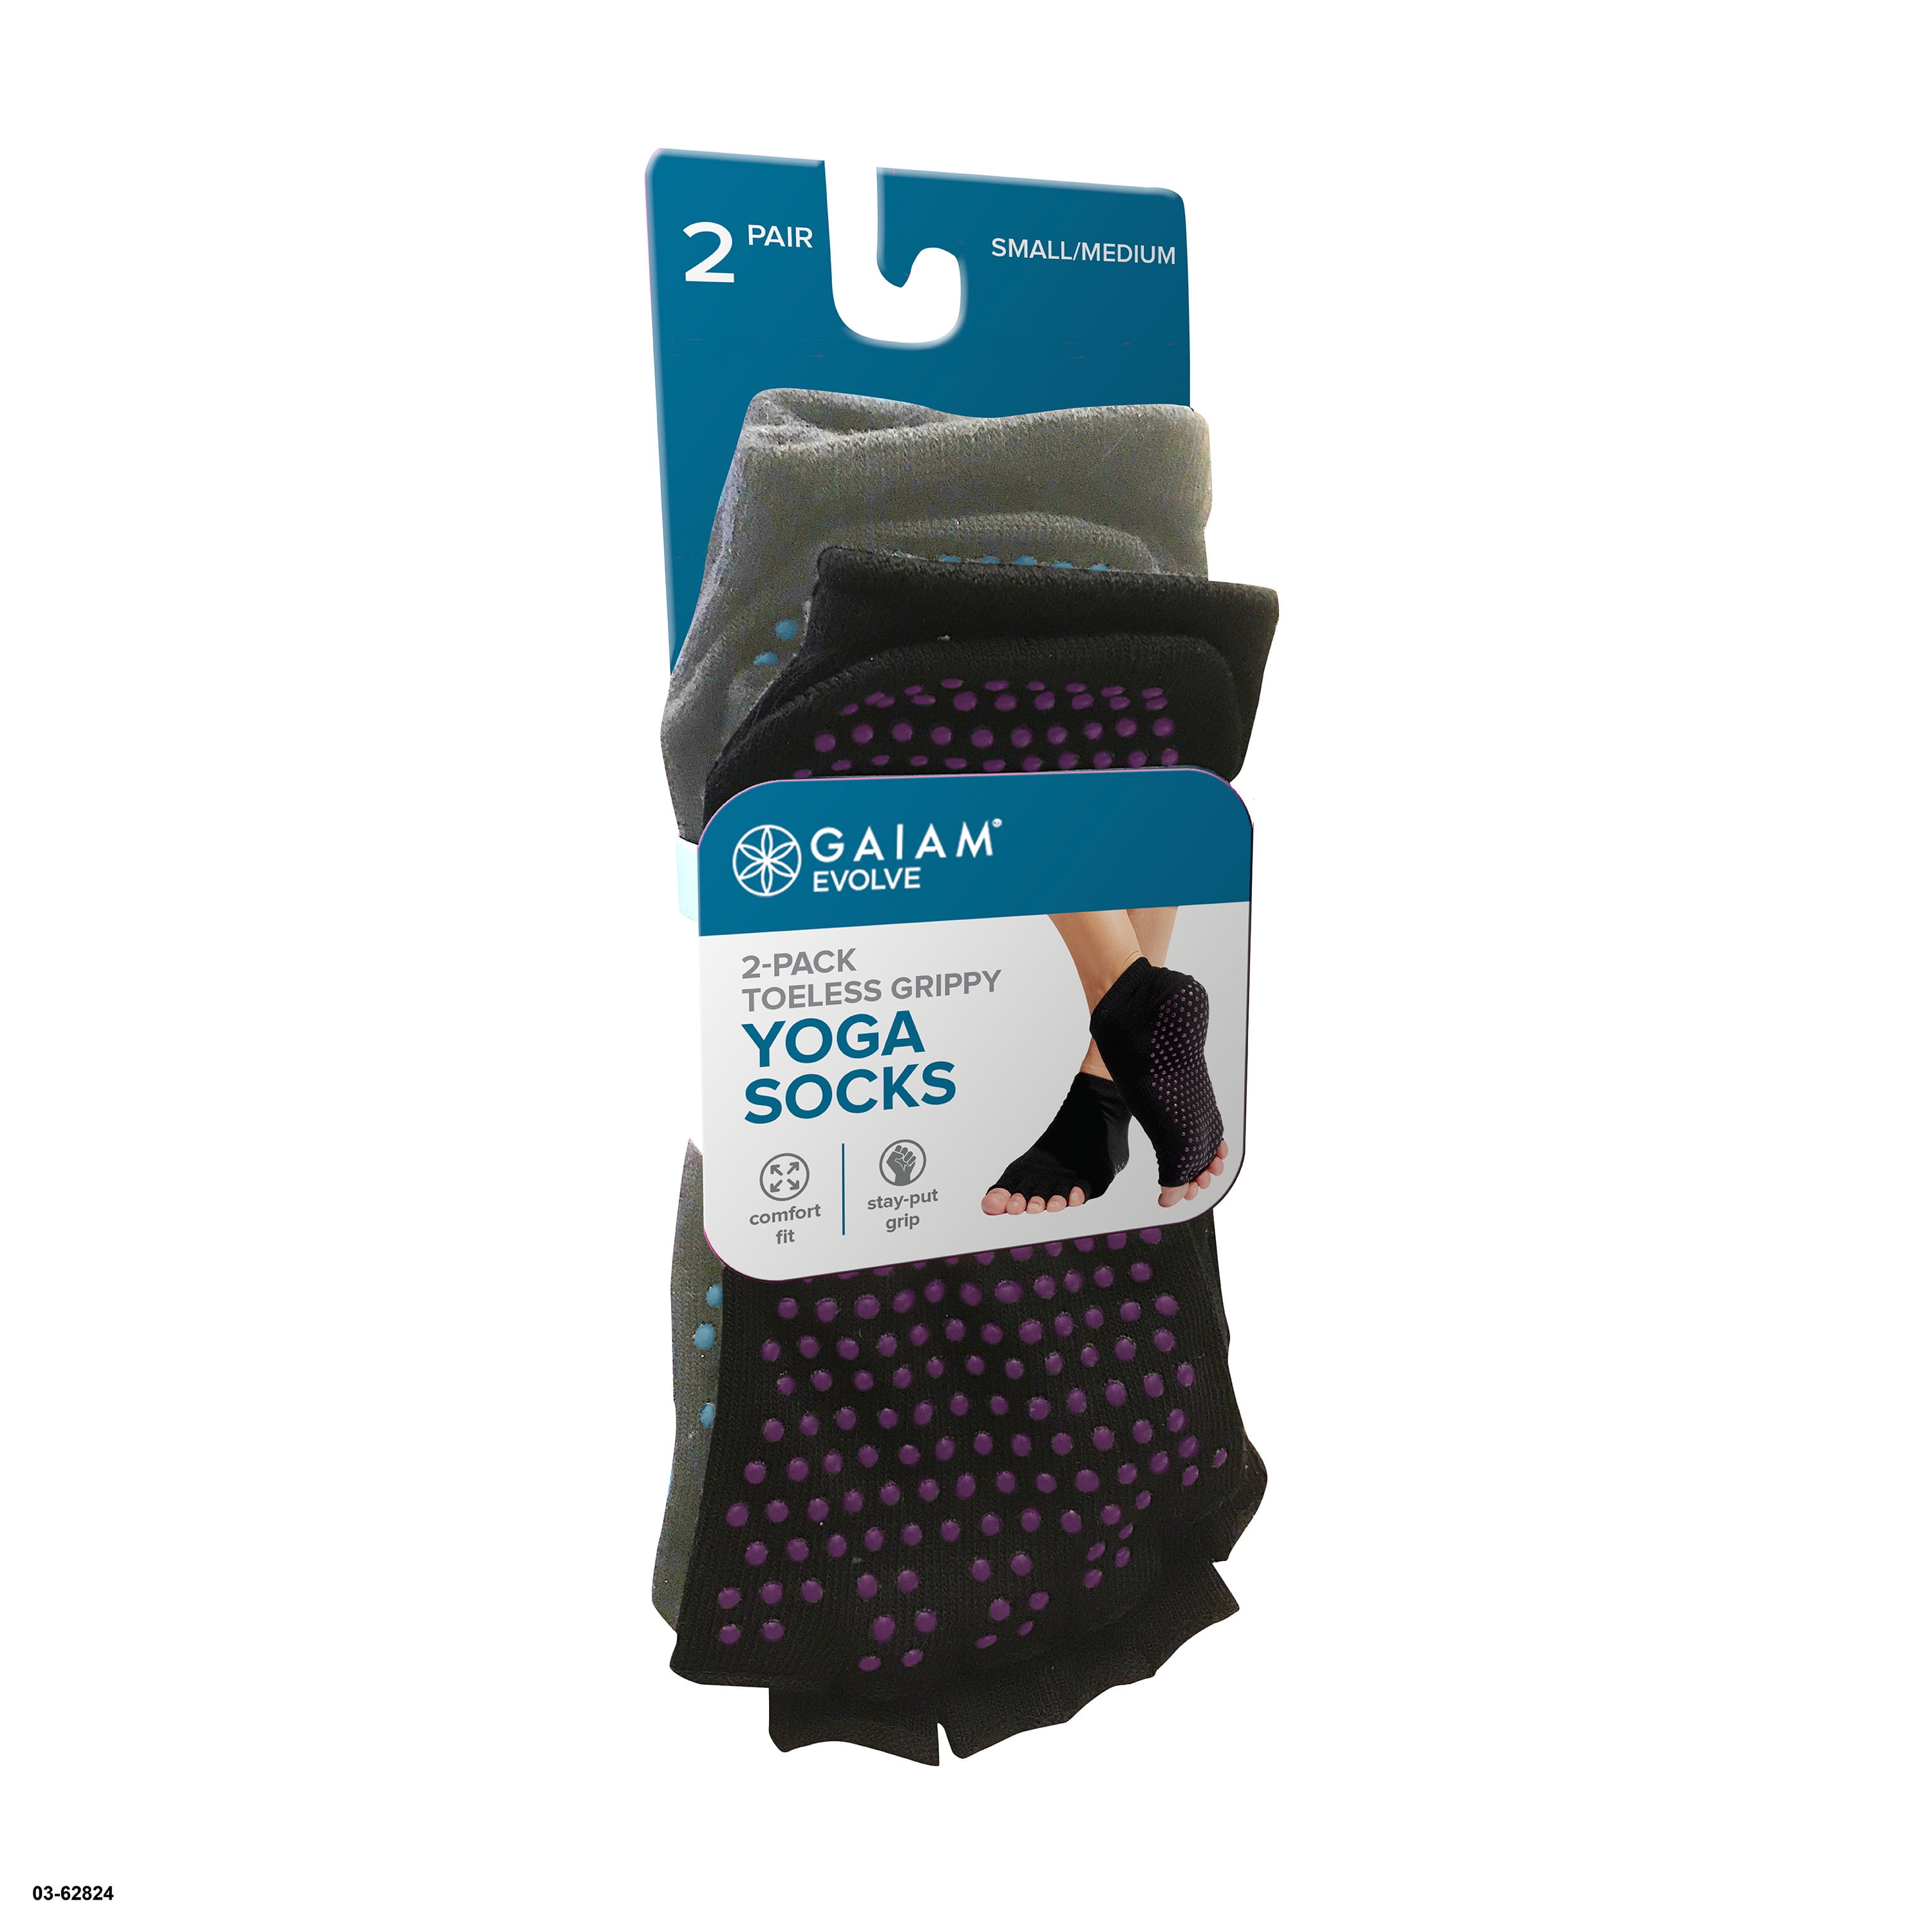 Evolve by Gaiam Toeless Grippy Yoga Socks, 2 Pack, Black and Grey, Small/Medium